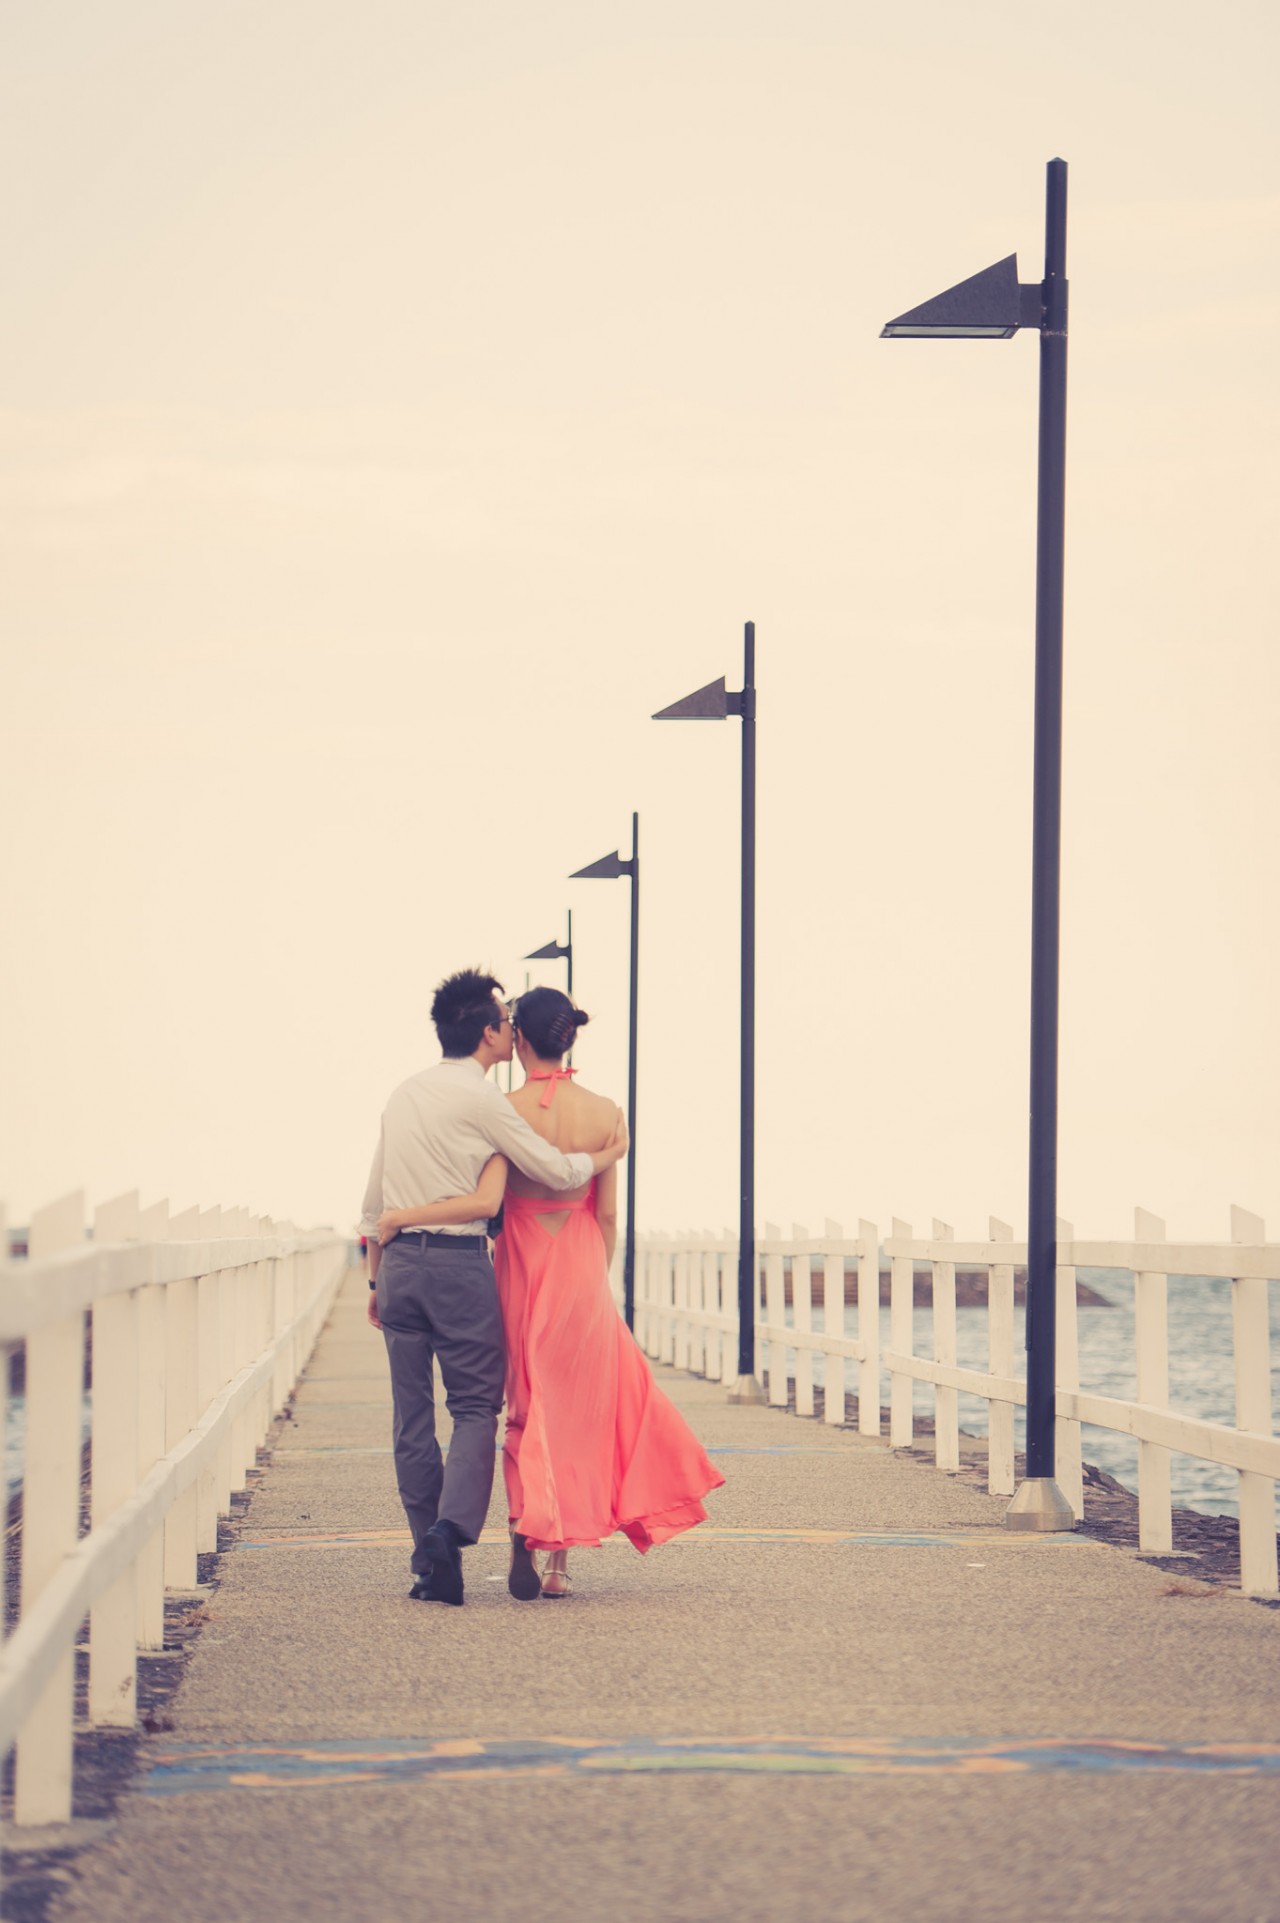 Wynnum Esplanade Portraits - Engagement Photos by MinWye Studios - Tish and Jun walking down a pier